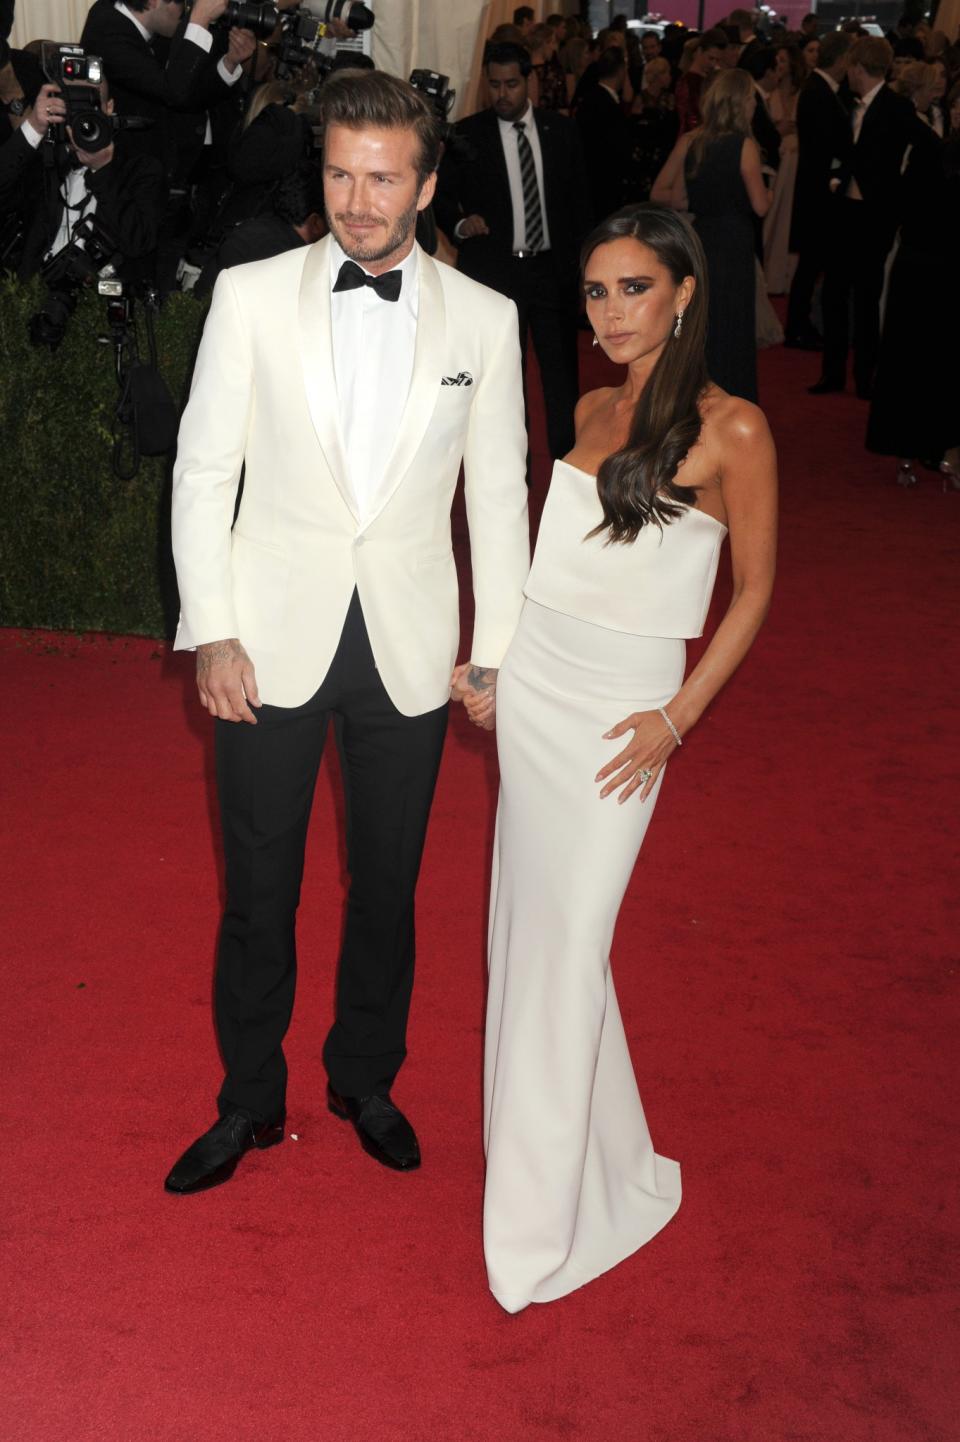 David and Victoria Beckham at the 2014 Met Gala